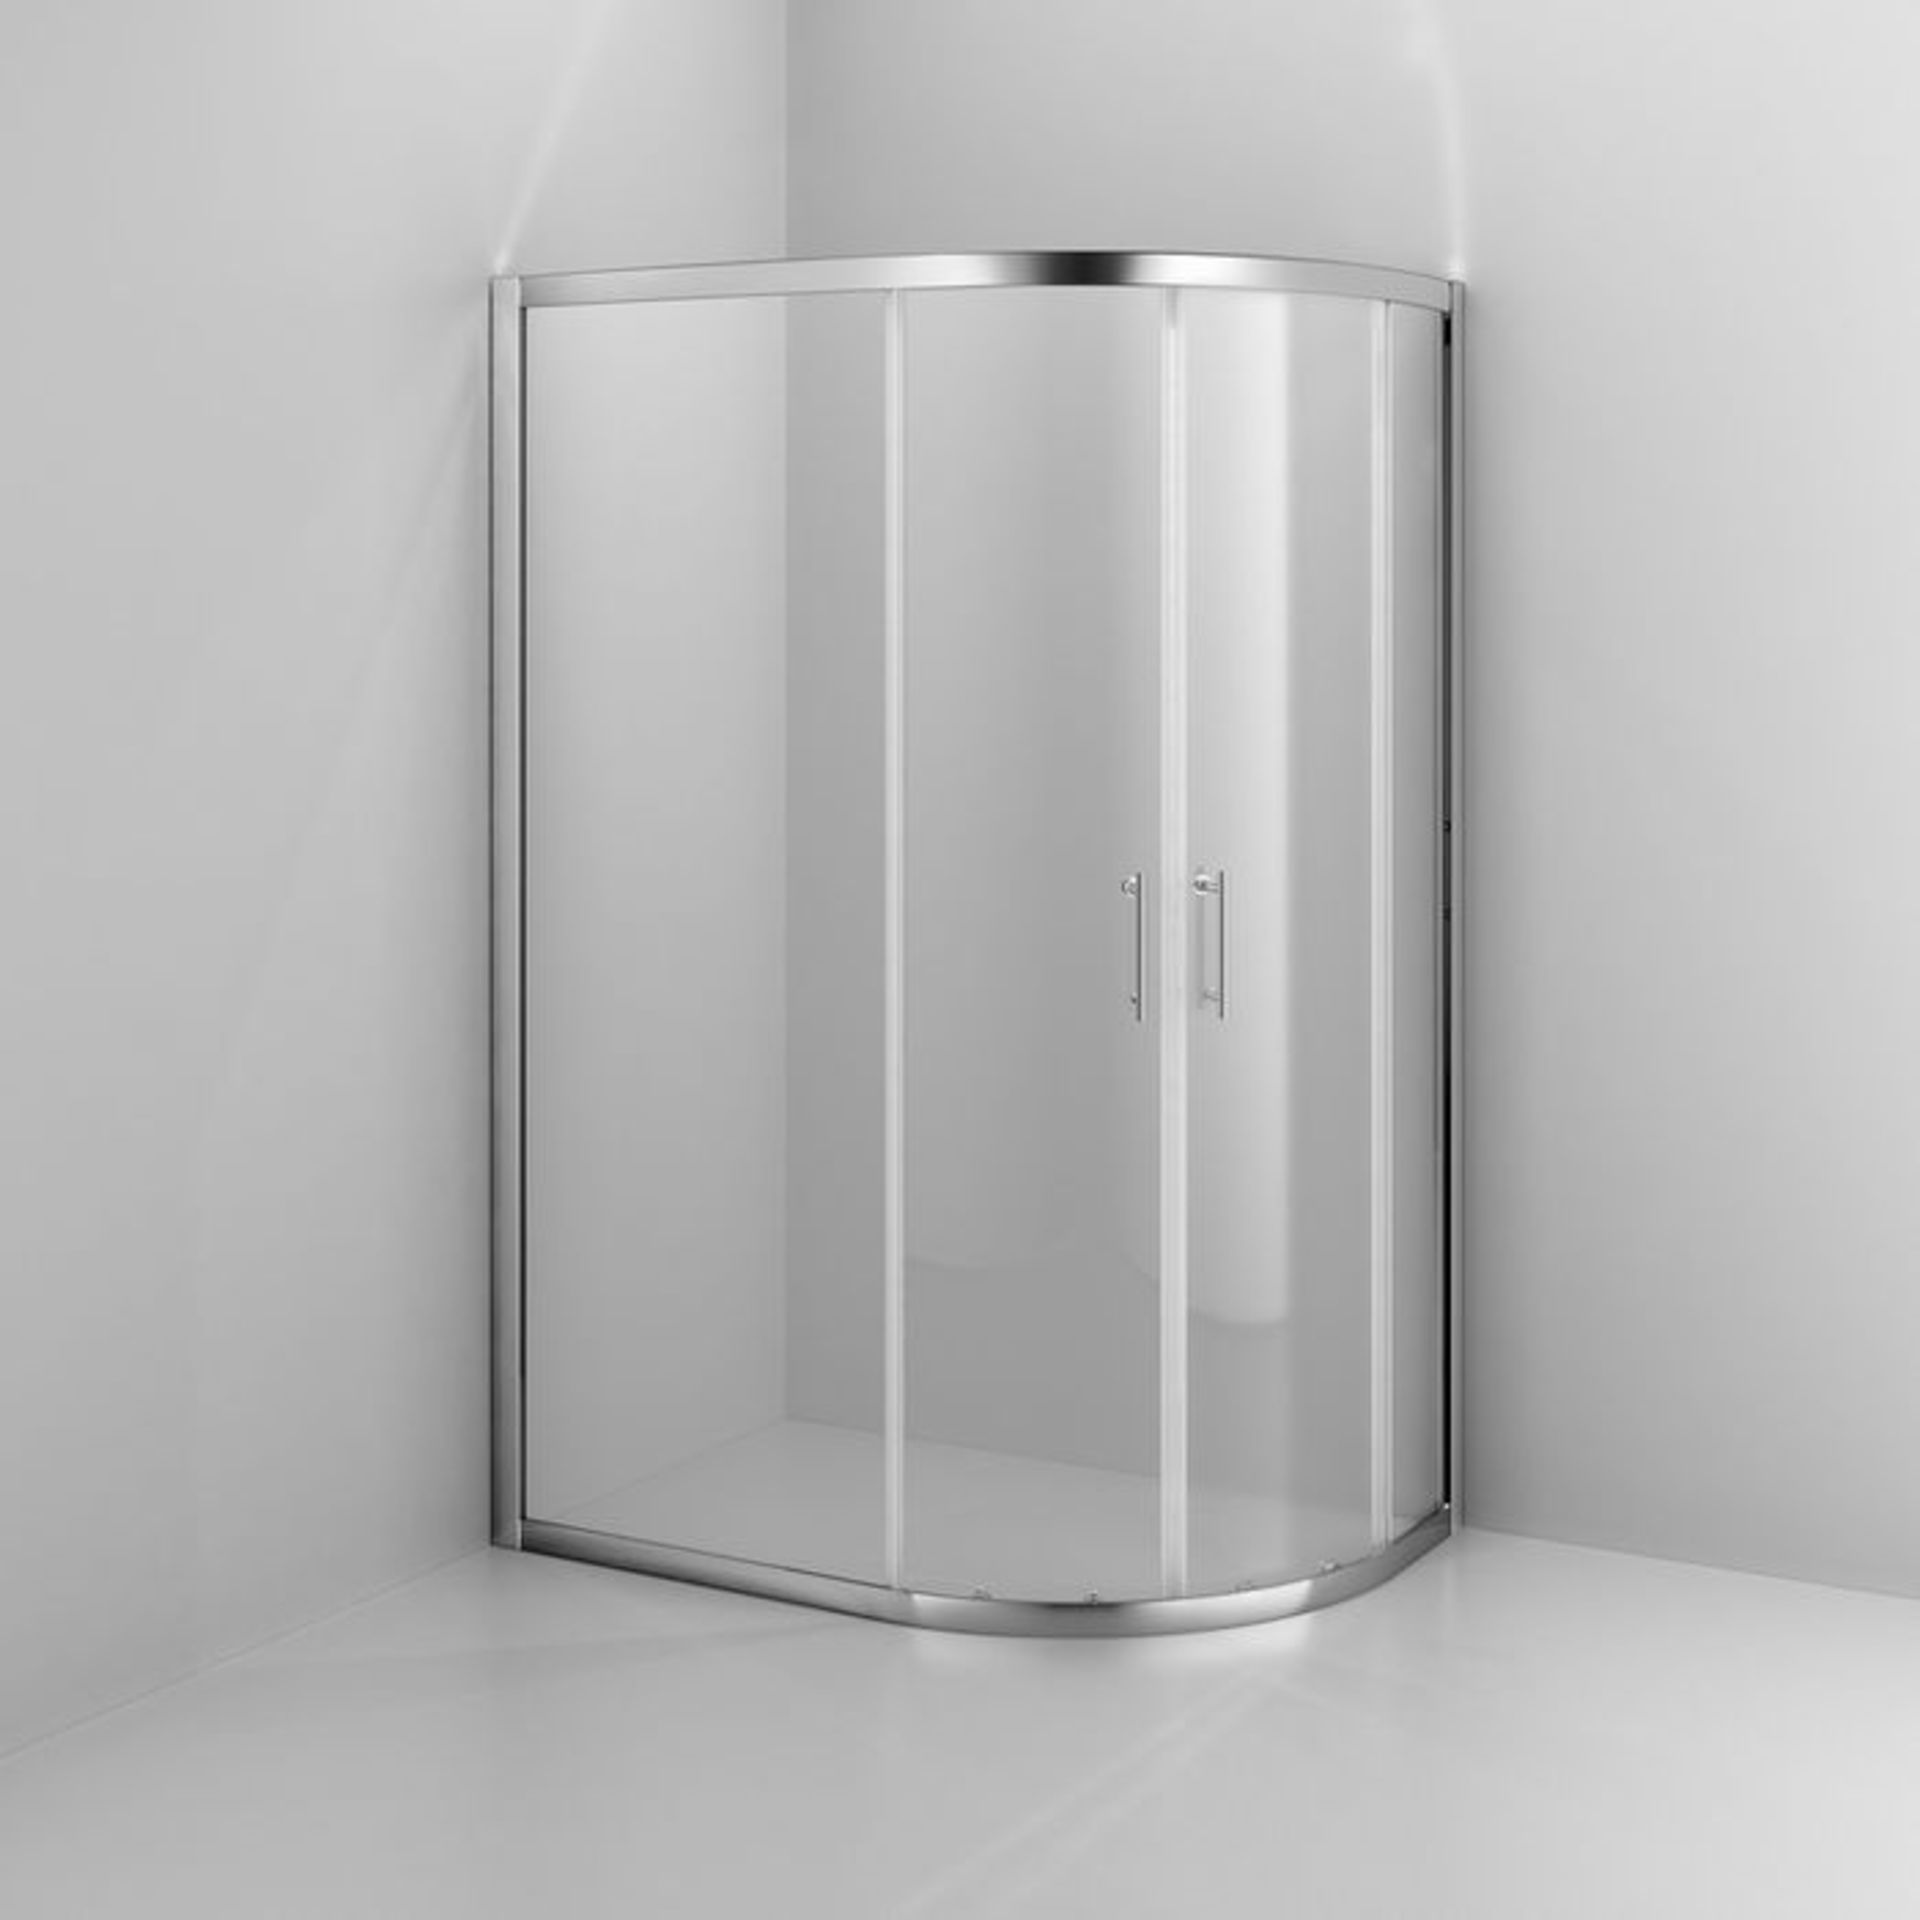 (PA74) 760x900mm - 6mm - Elements Offset Quadrant Shower Enclosure - Reversible. RRP £349.99. Our - Image 3 of 3